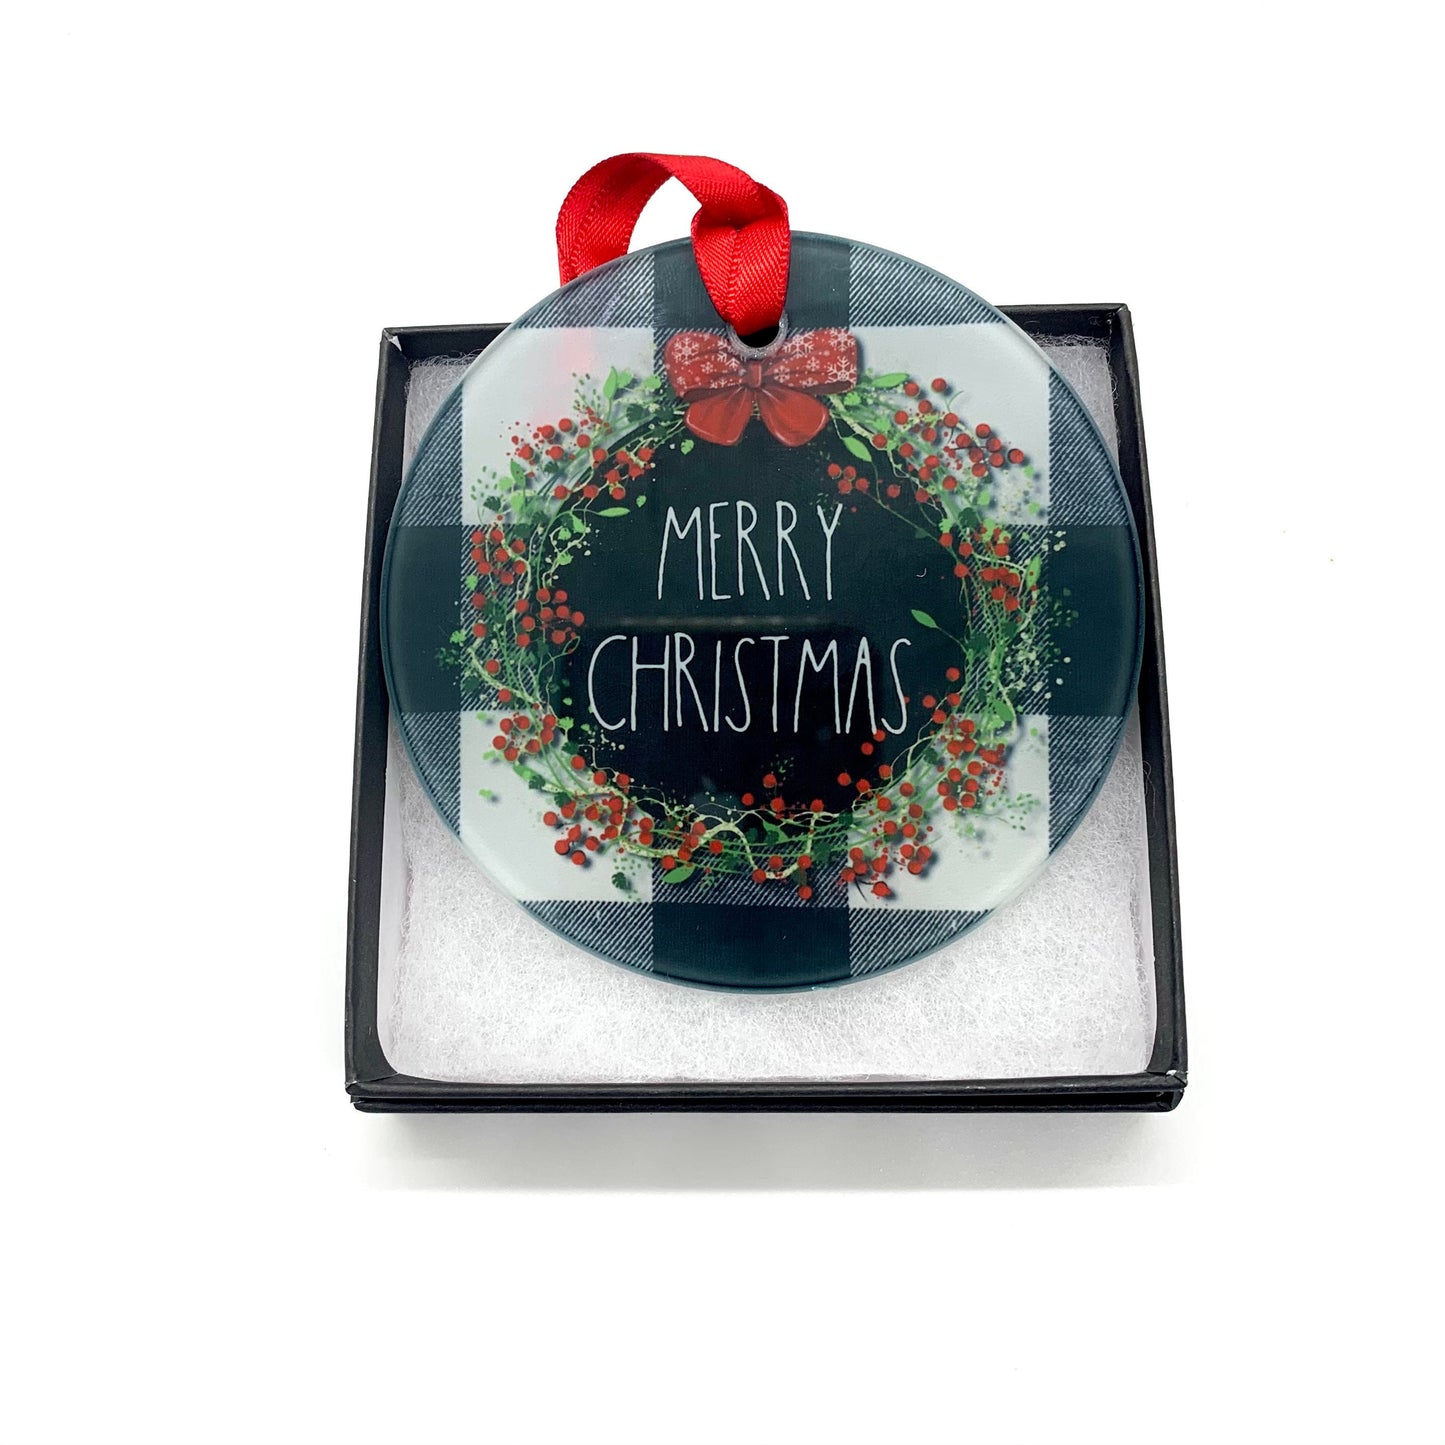 Merry Christmas Glass Ornament / Suncatcher